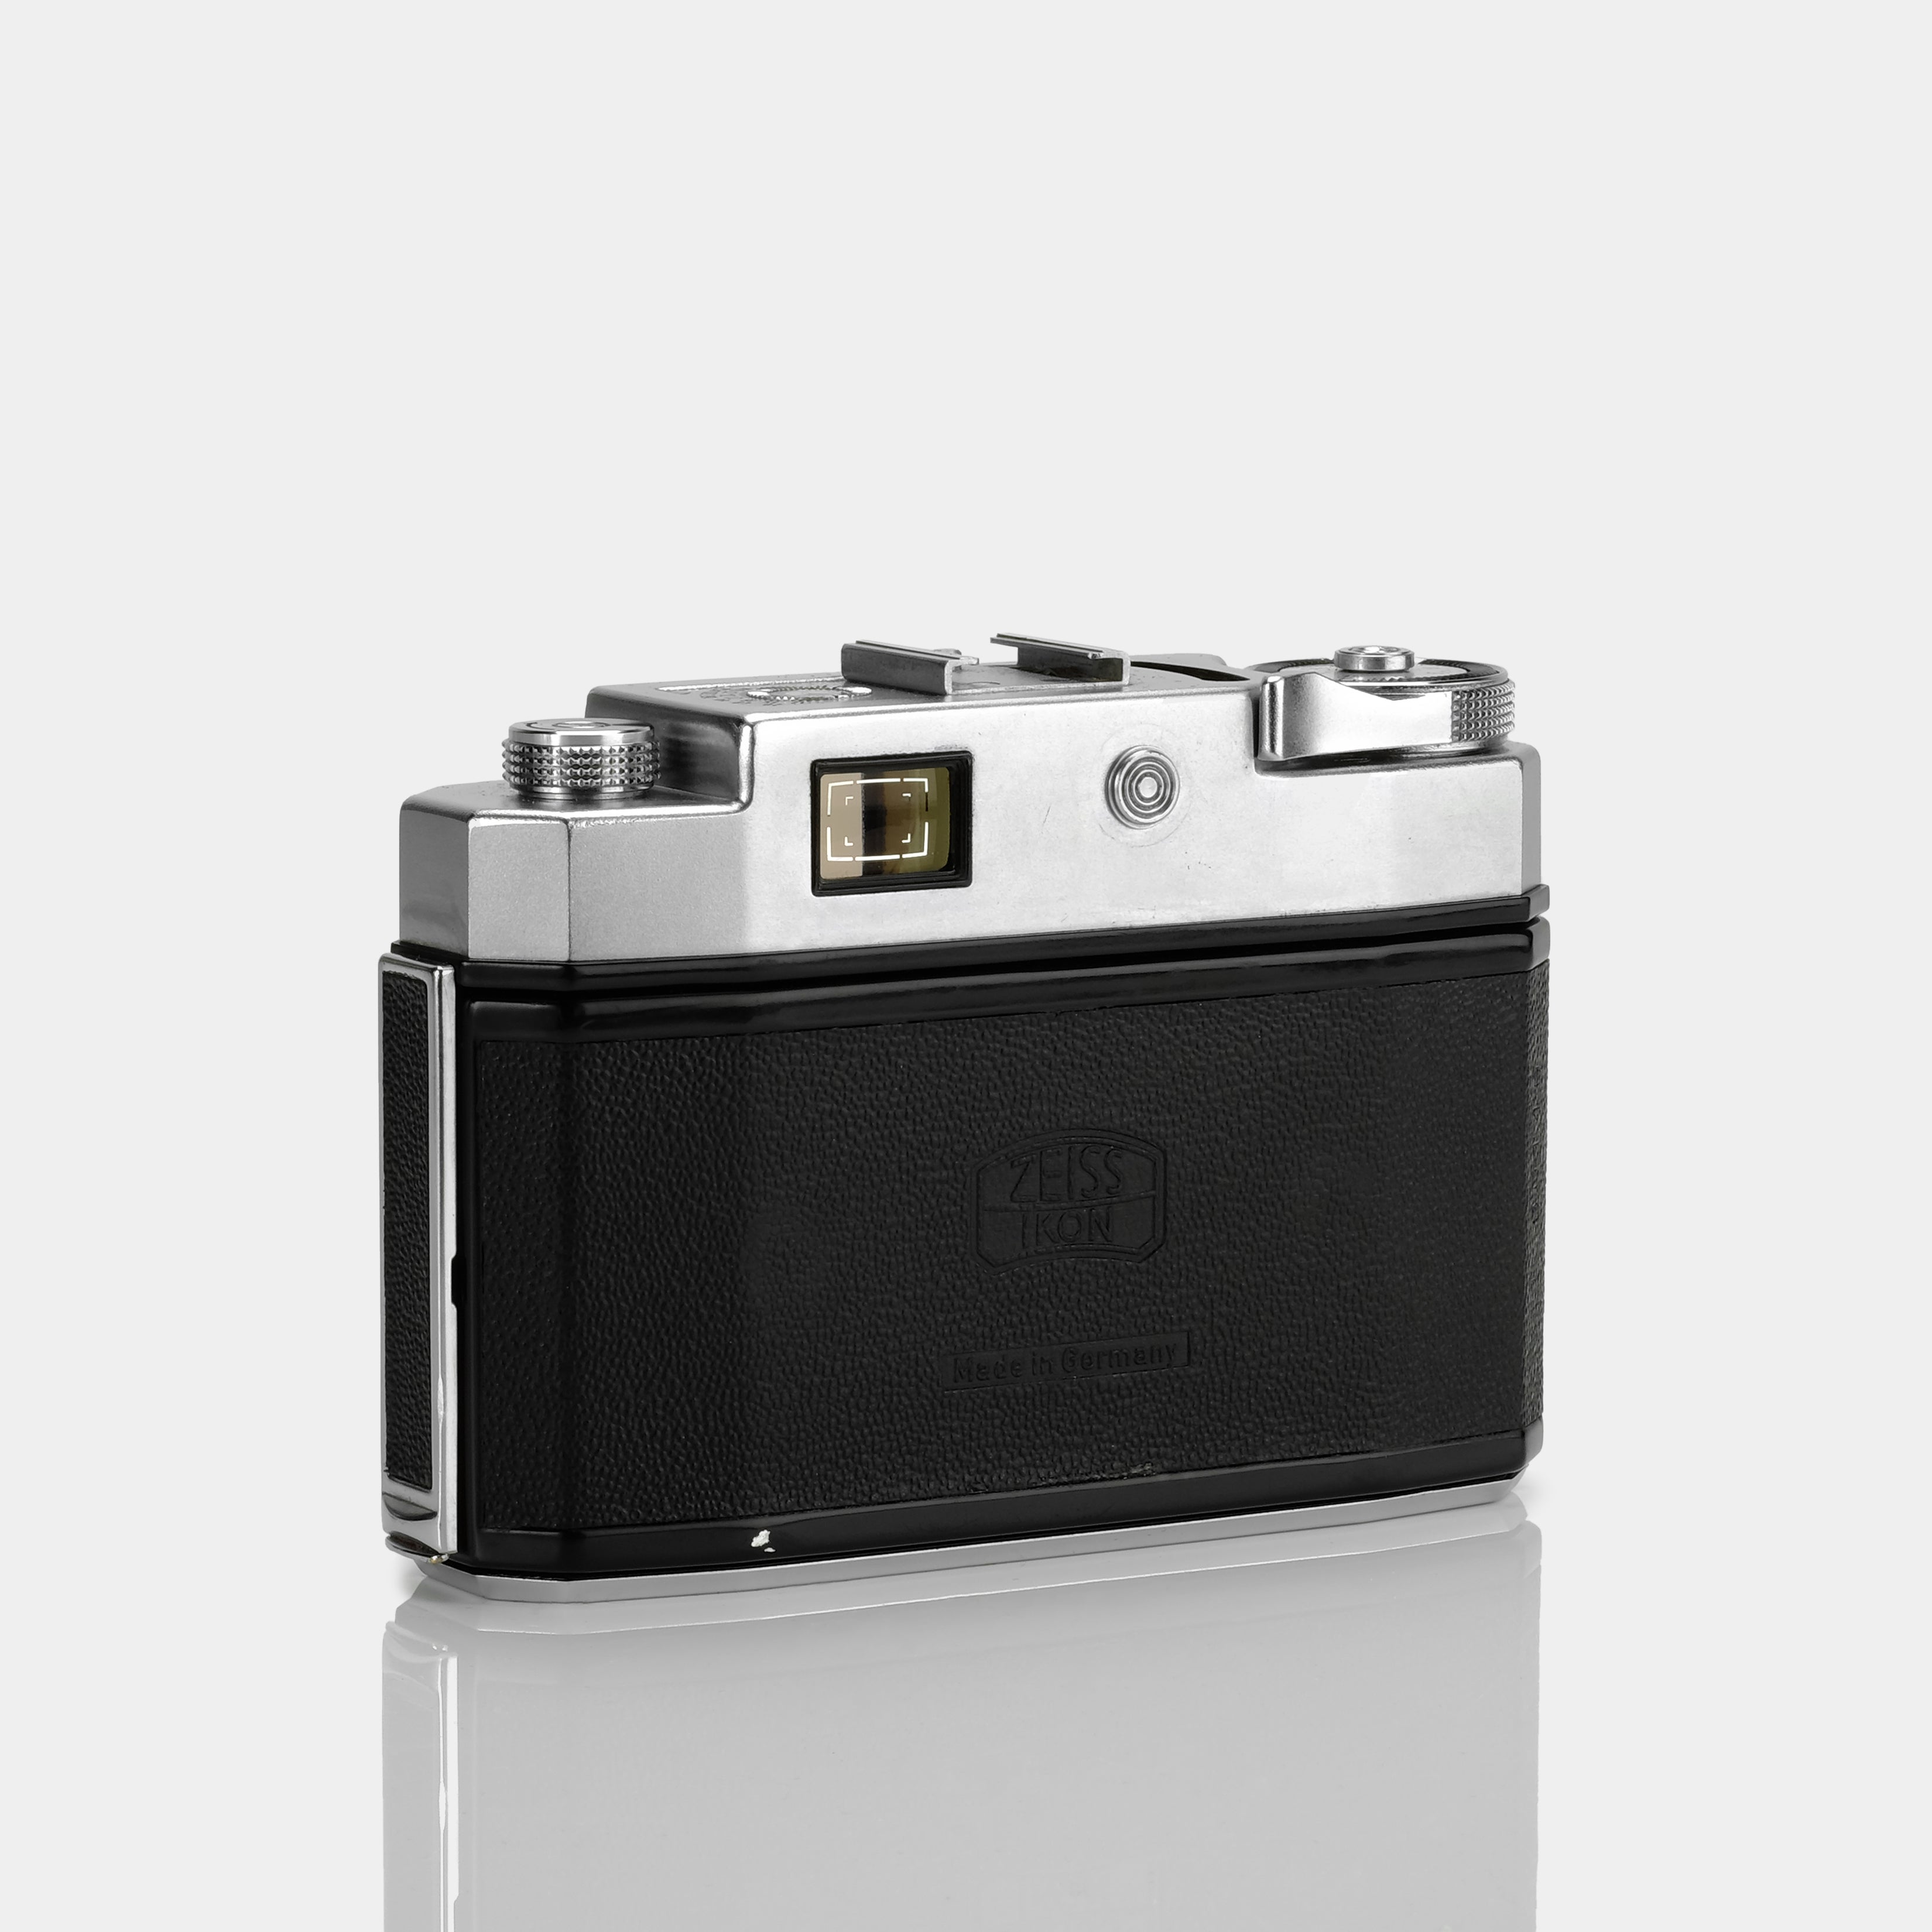 Zeiss Ikon Contina-matic III 35mm Film Camera